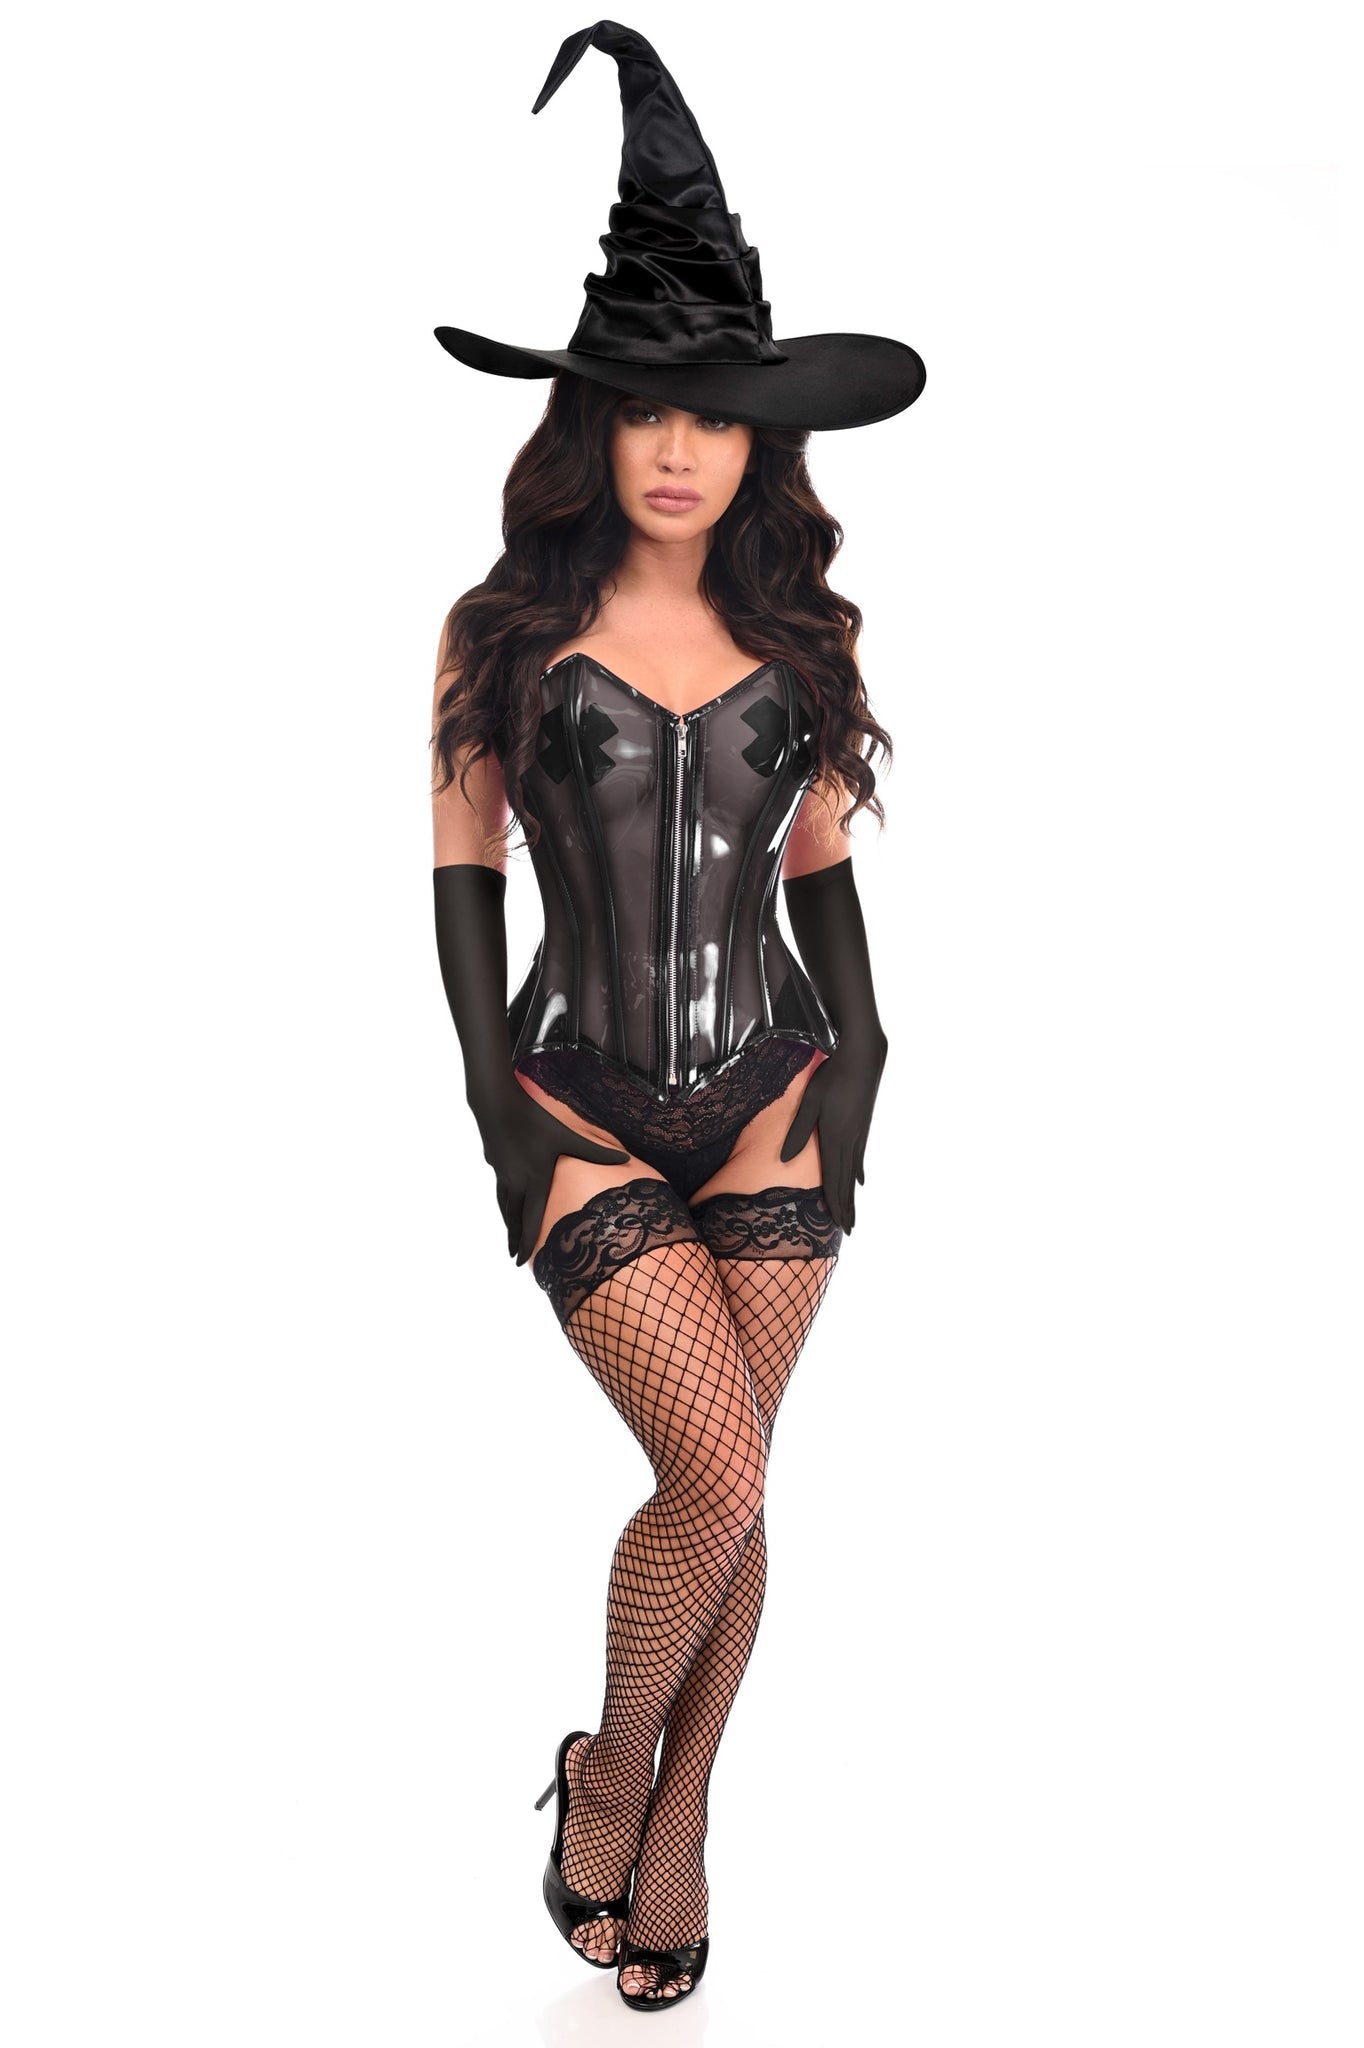 Lavish 3 Piece Clear Black Witch Corset Costume by Daisy Corsets in Size S, M, L, XL, 2X, 3X, 4X, 5X, or 6X